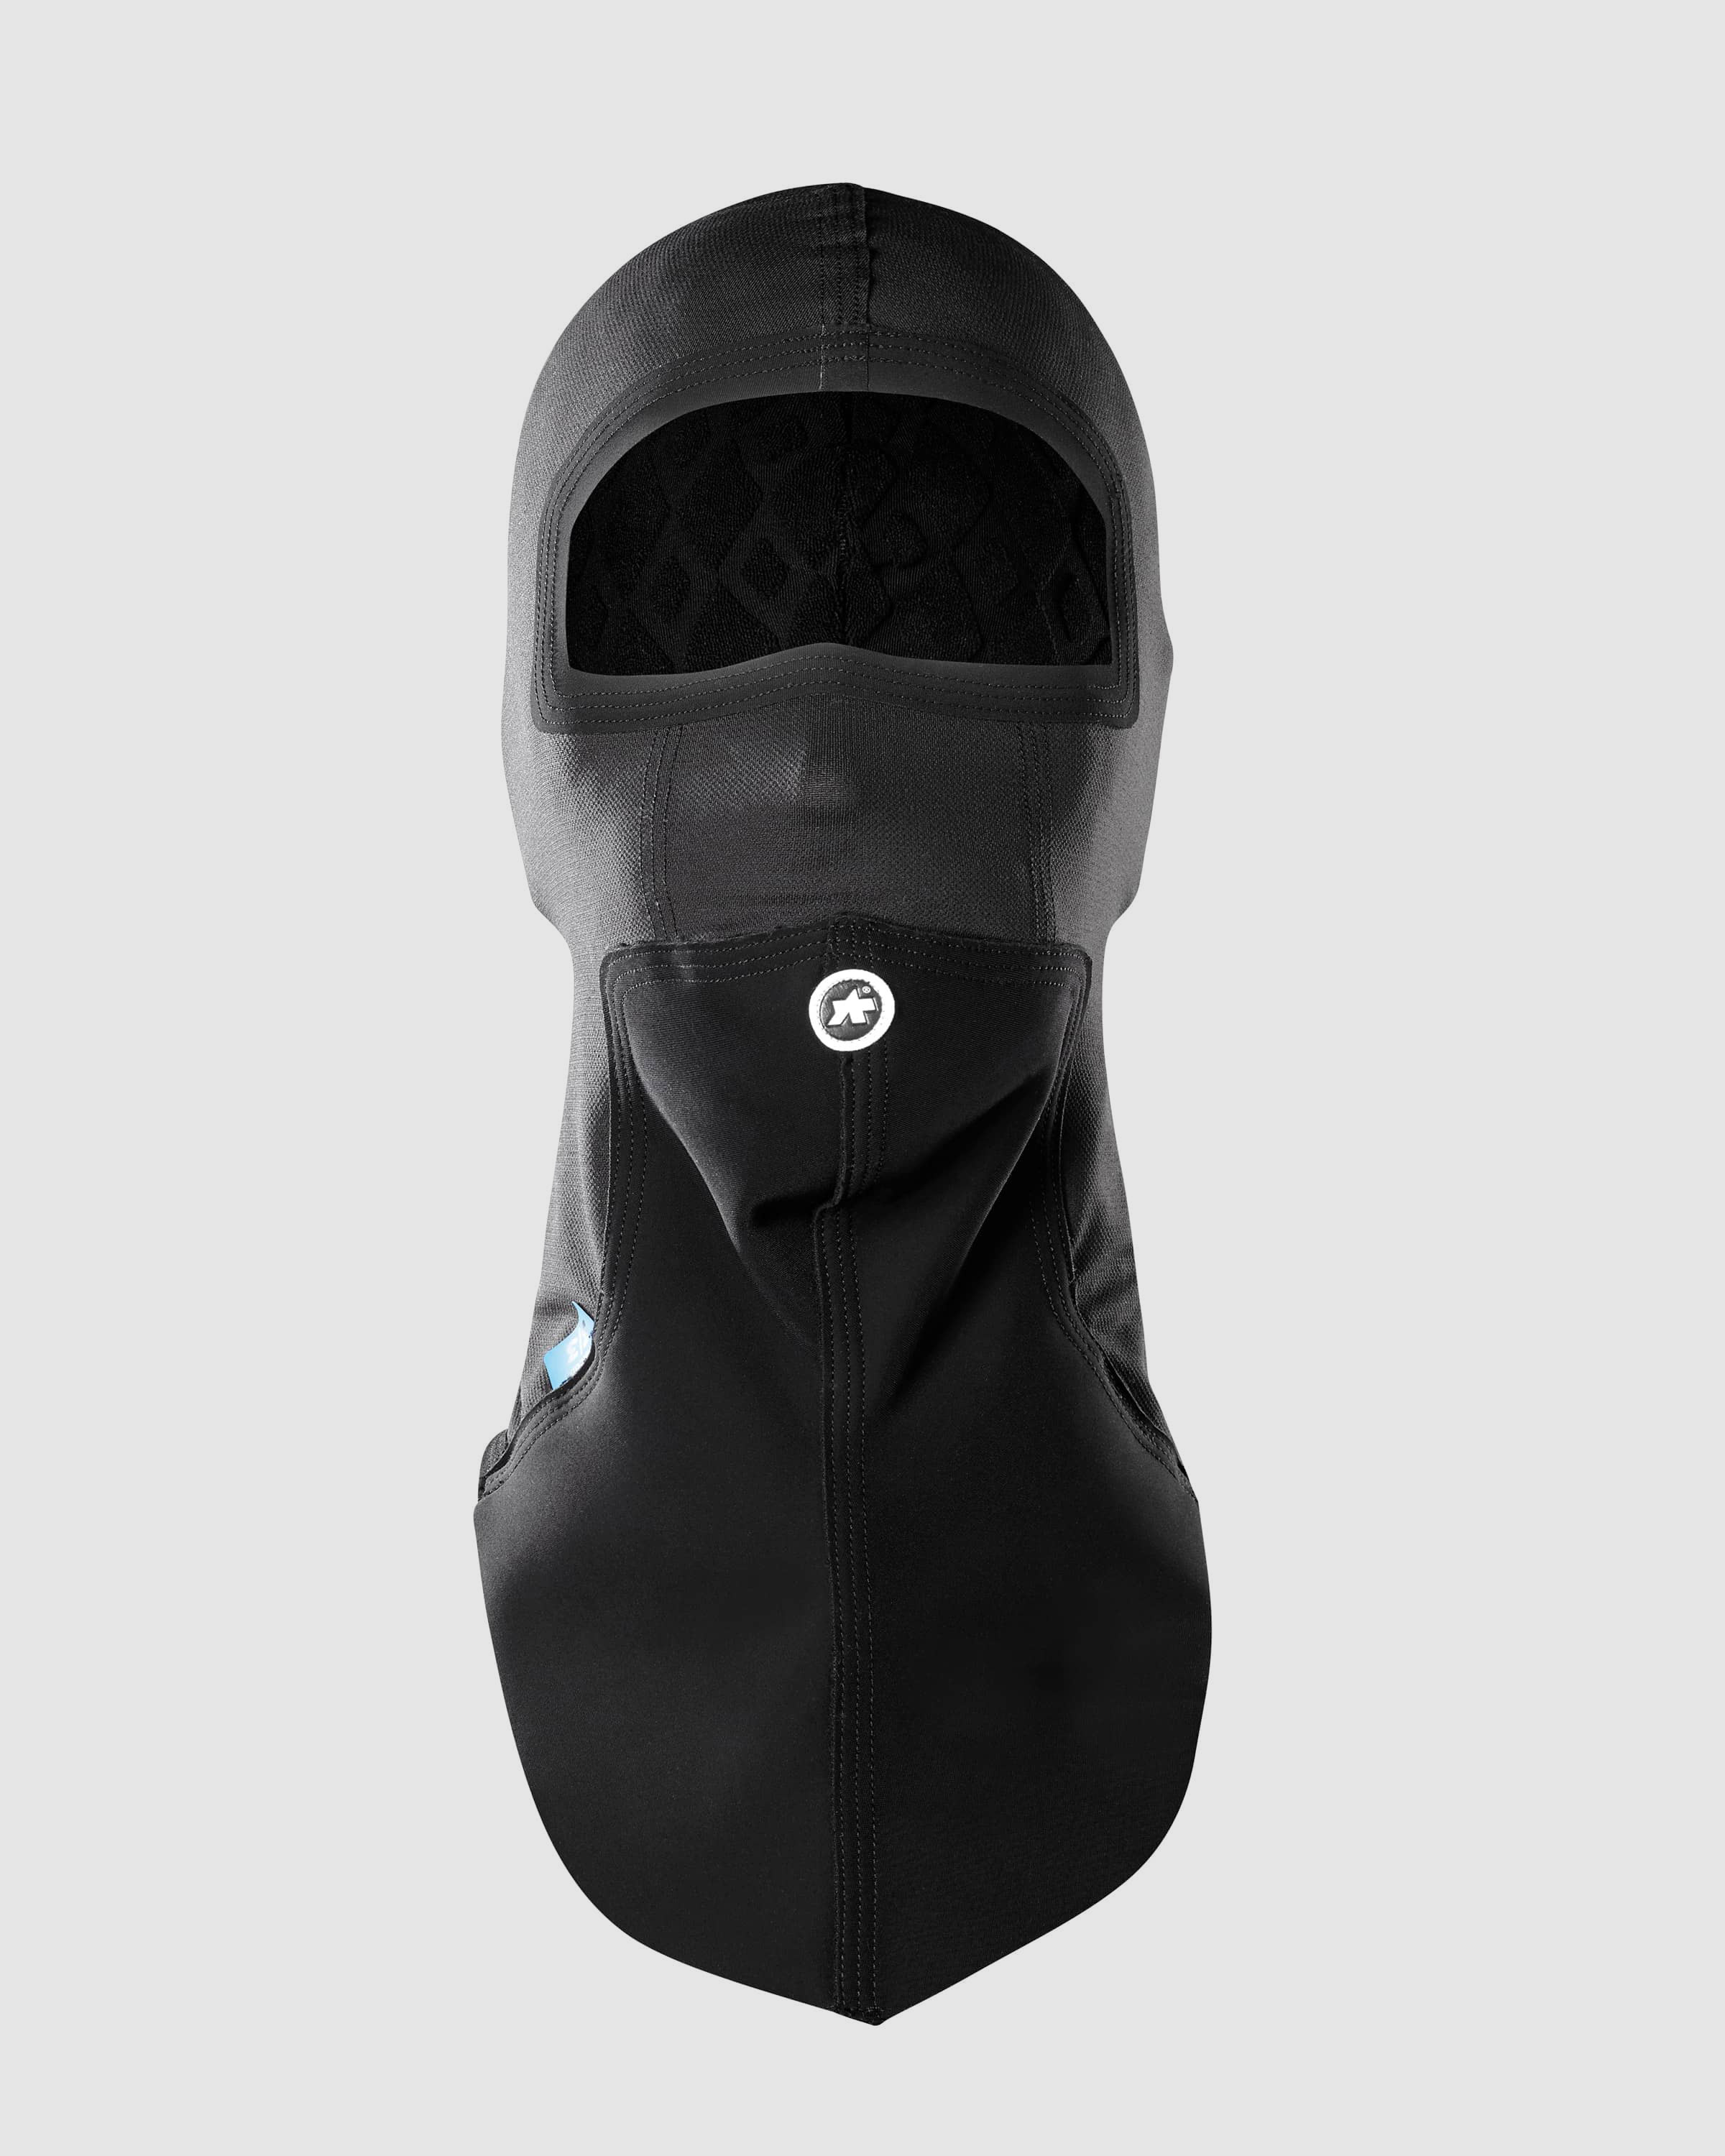 ASSOS Ultraz Winter Face Mask - blackSeries - Cagoule cycliste Hiver -  PlaneteCycle